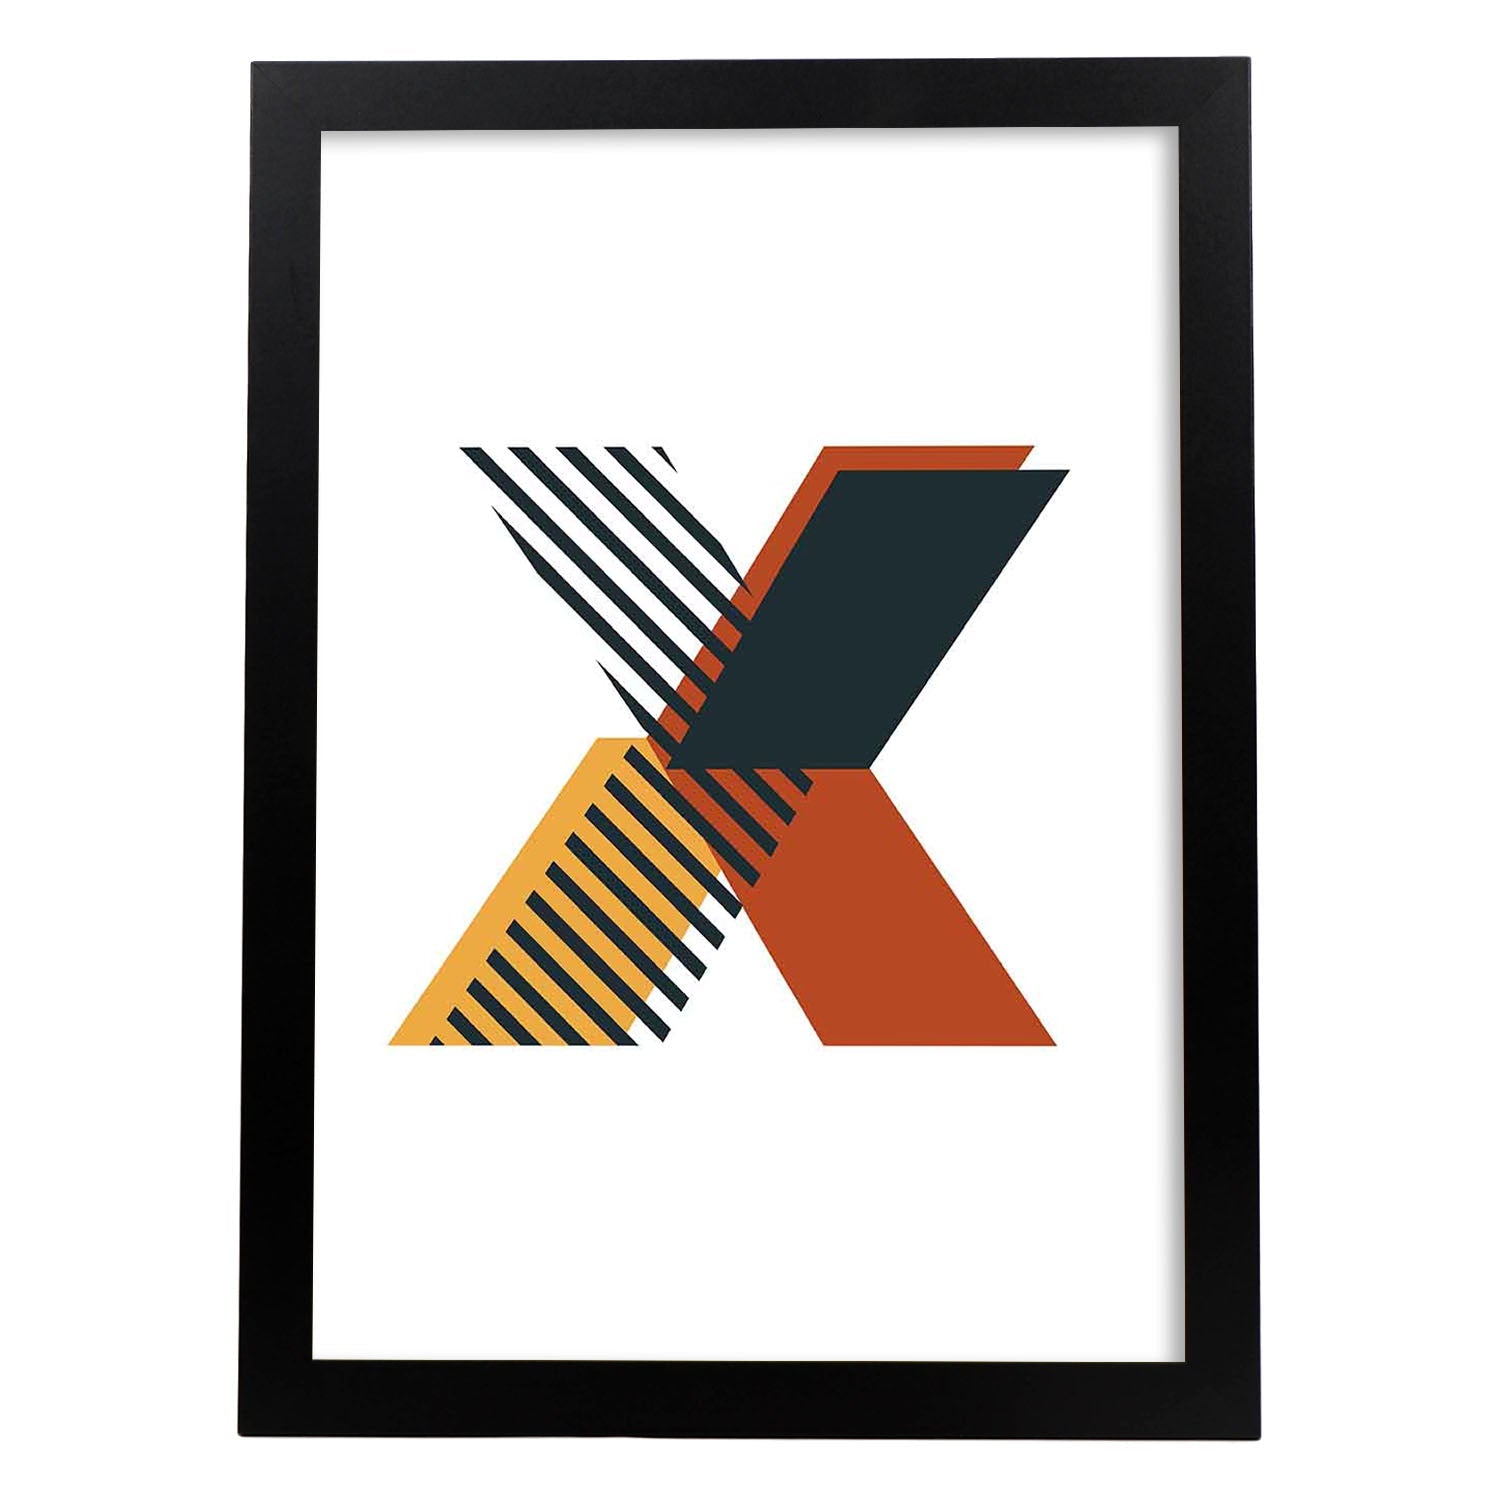 Poster de letra X. Lámina estilo Geometria con imágenes del alfabeto.-Artwork-Nacnic-A3-Marco Negro-Nacnic Estudio SL